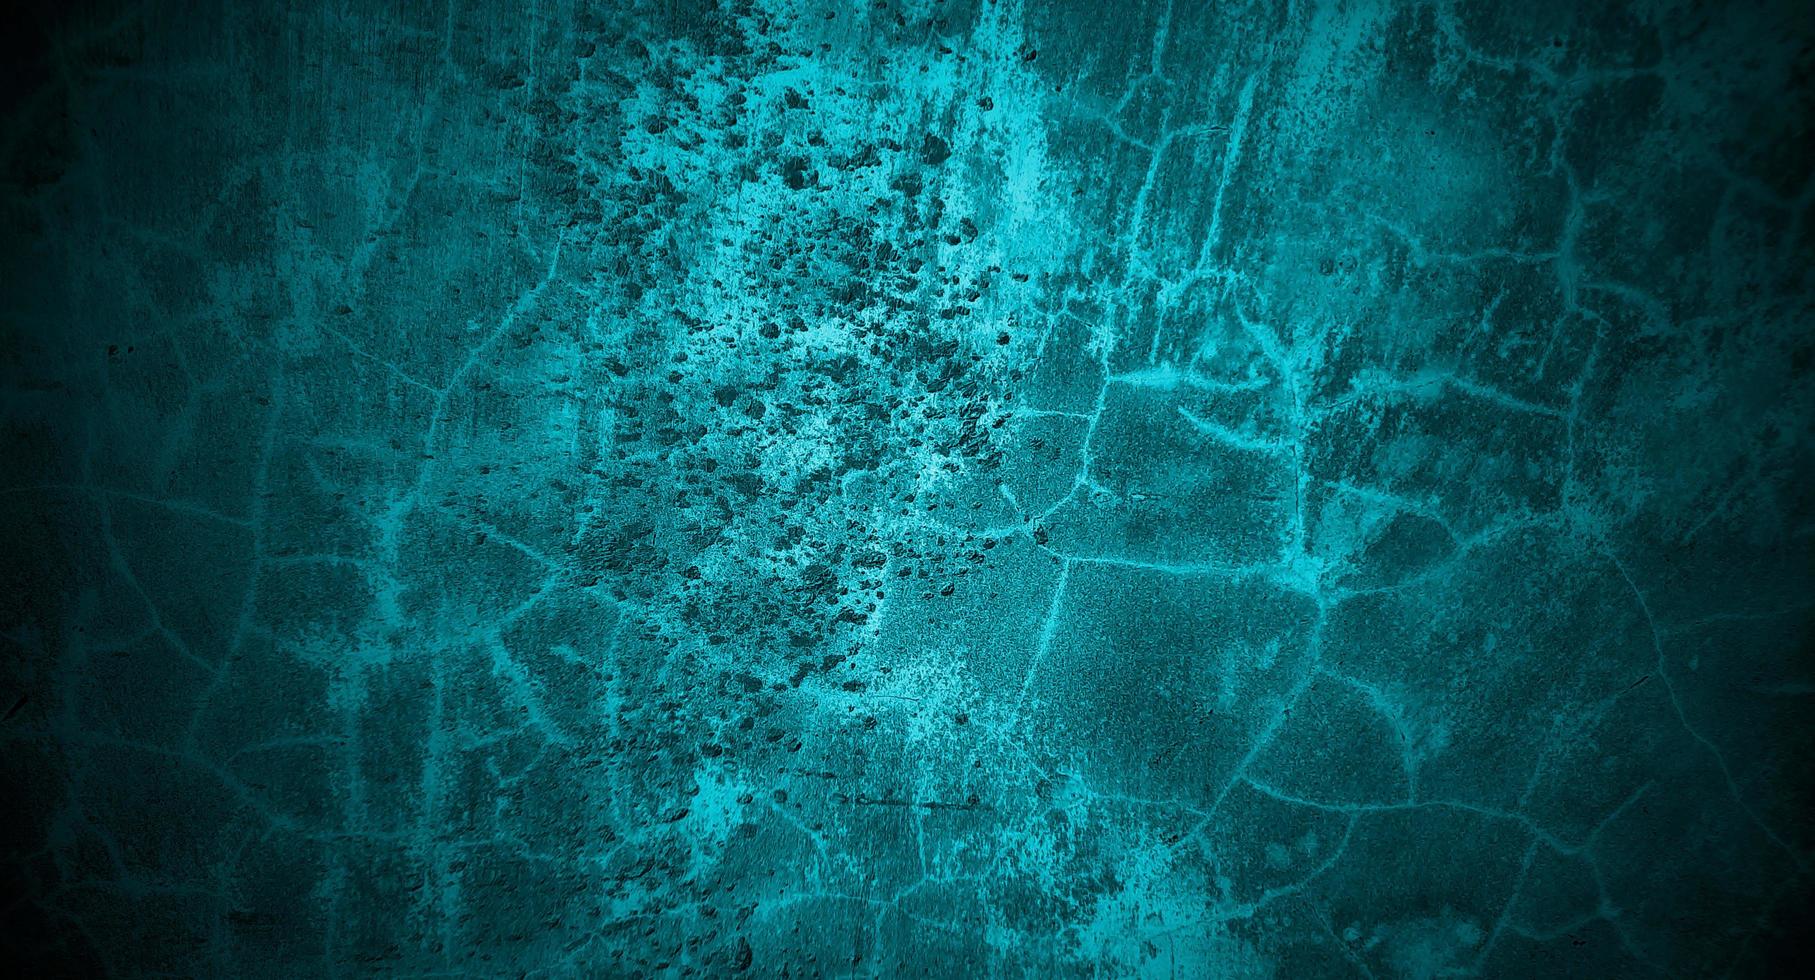 blauw beton eng voor achtergrond. donker blauwe muur halloween achtergrond concept. horror cement textuur foto